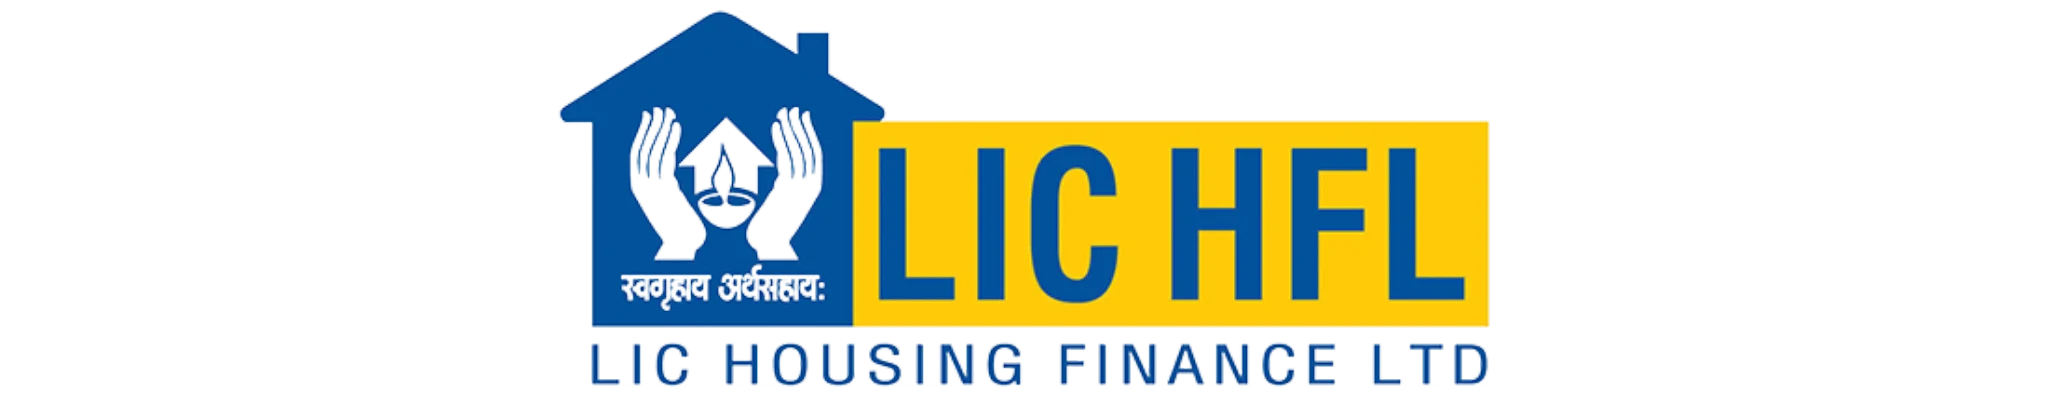 home loan finance company in delhi